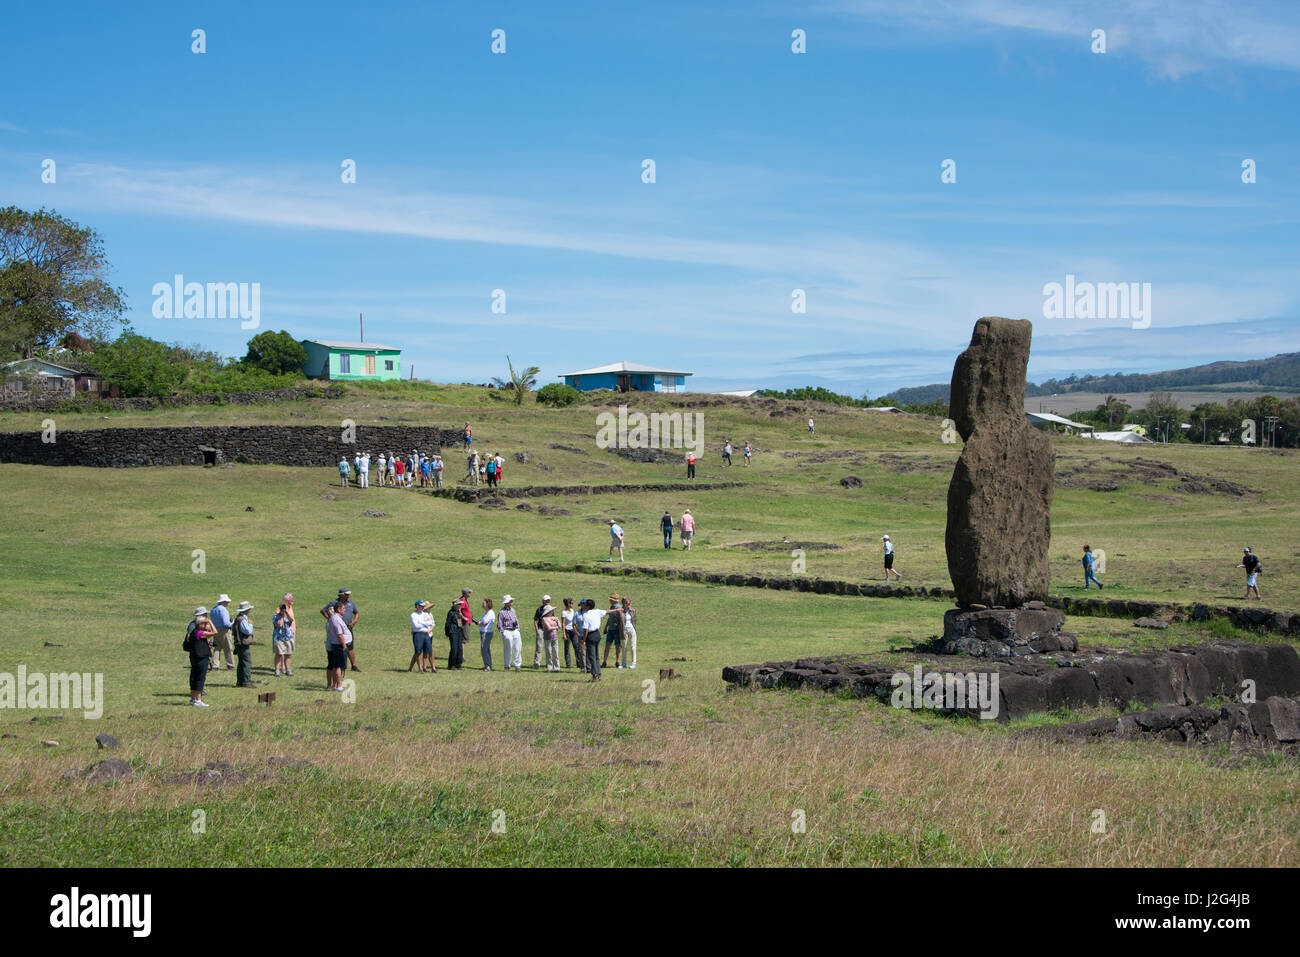 Chile, Easter Island aka Rapa Nui, Hanga Roa. Rapa Nui National Park. Ahu Tahai, a lone well weathered standing moi surrounded by tourists. (Large format sizes available) Stock Photo